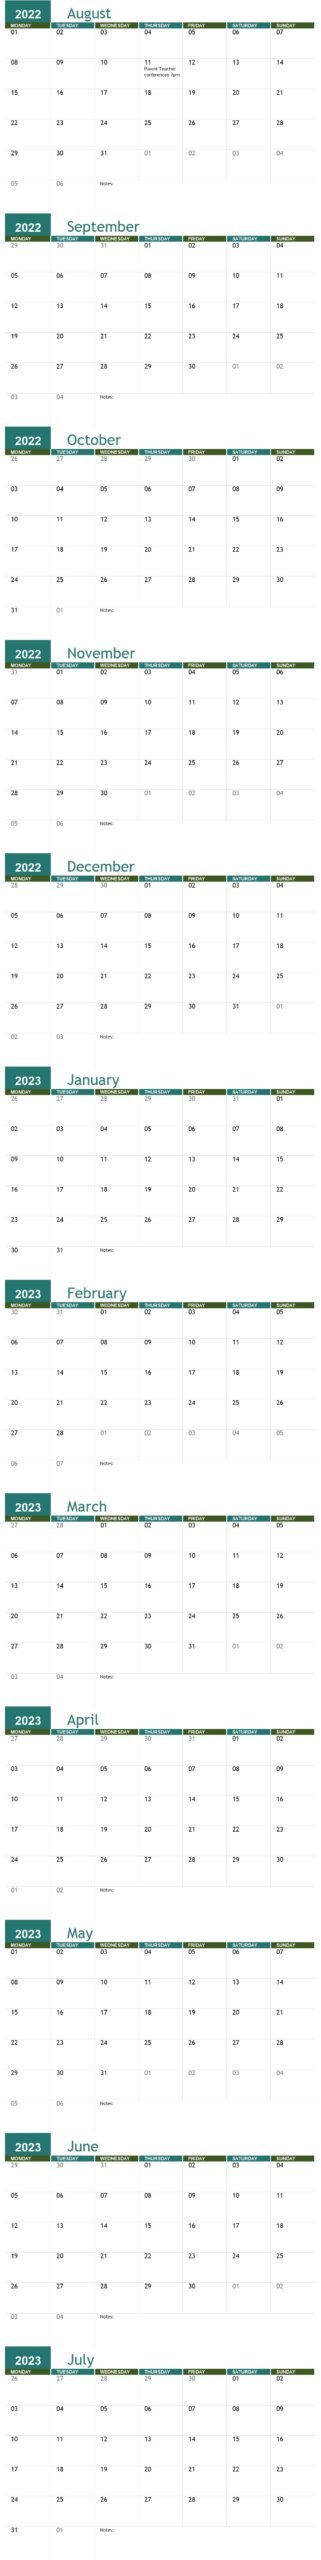 Academic Calendar Template In Excel (Download.xlsx)